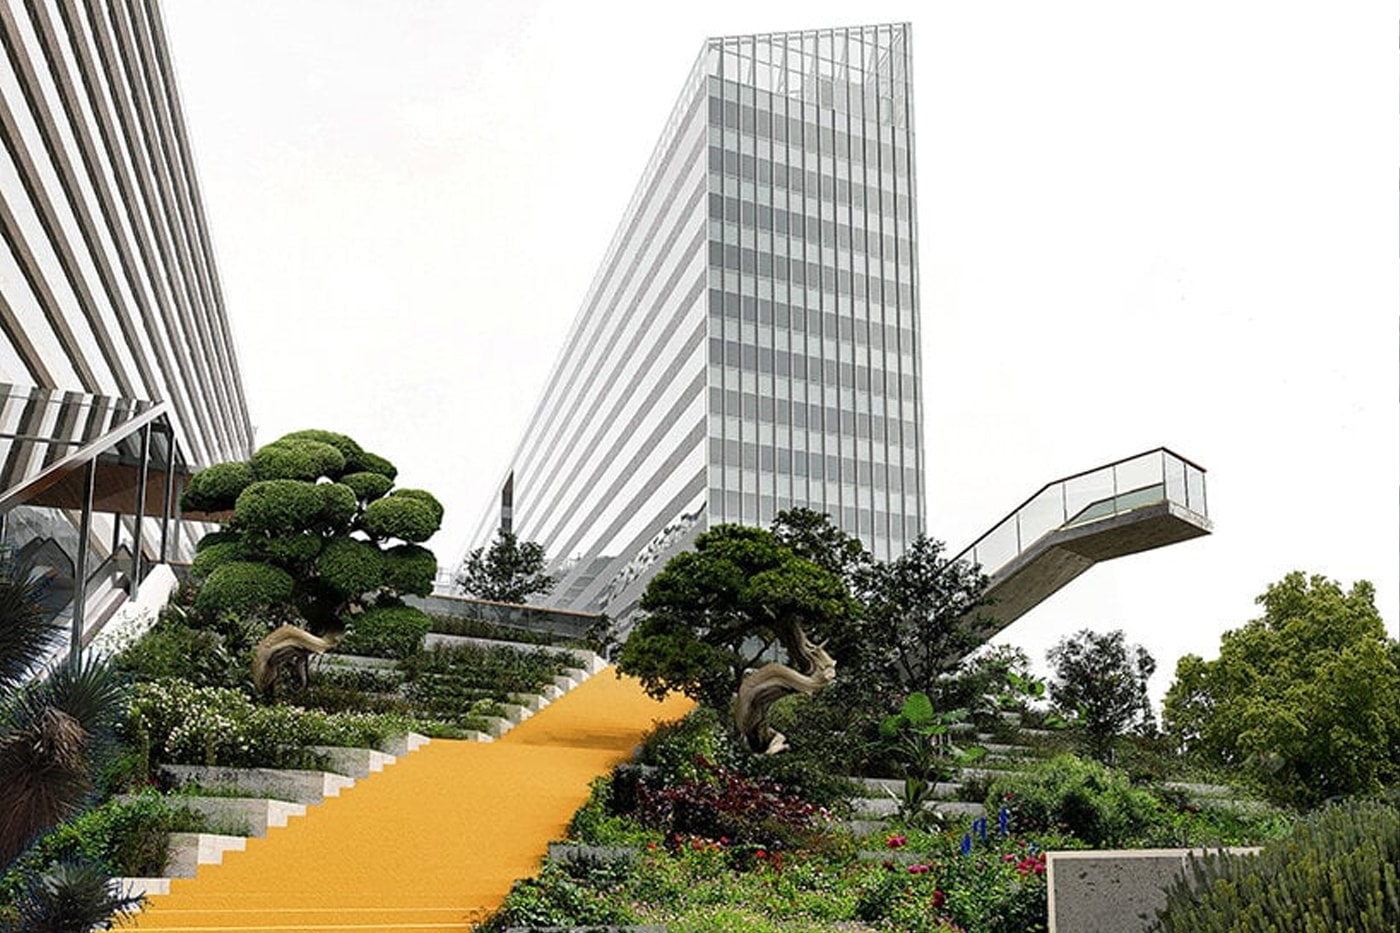 Snohetta Innovation hub urban garden reimagining bangkok Cloud 11 south sukhumvit Bangkok cybertech district greenery 